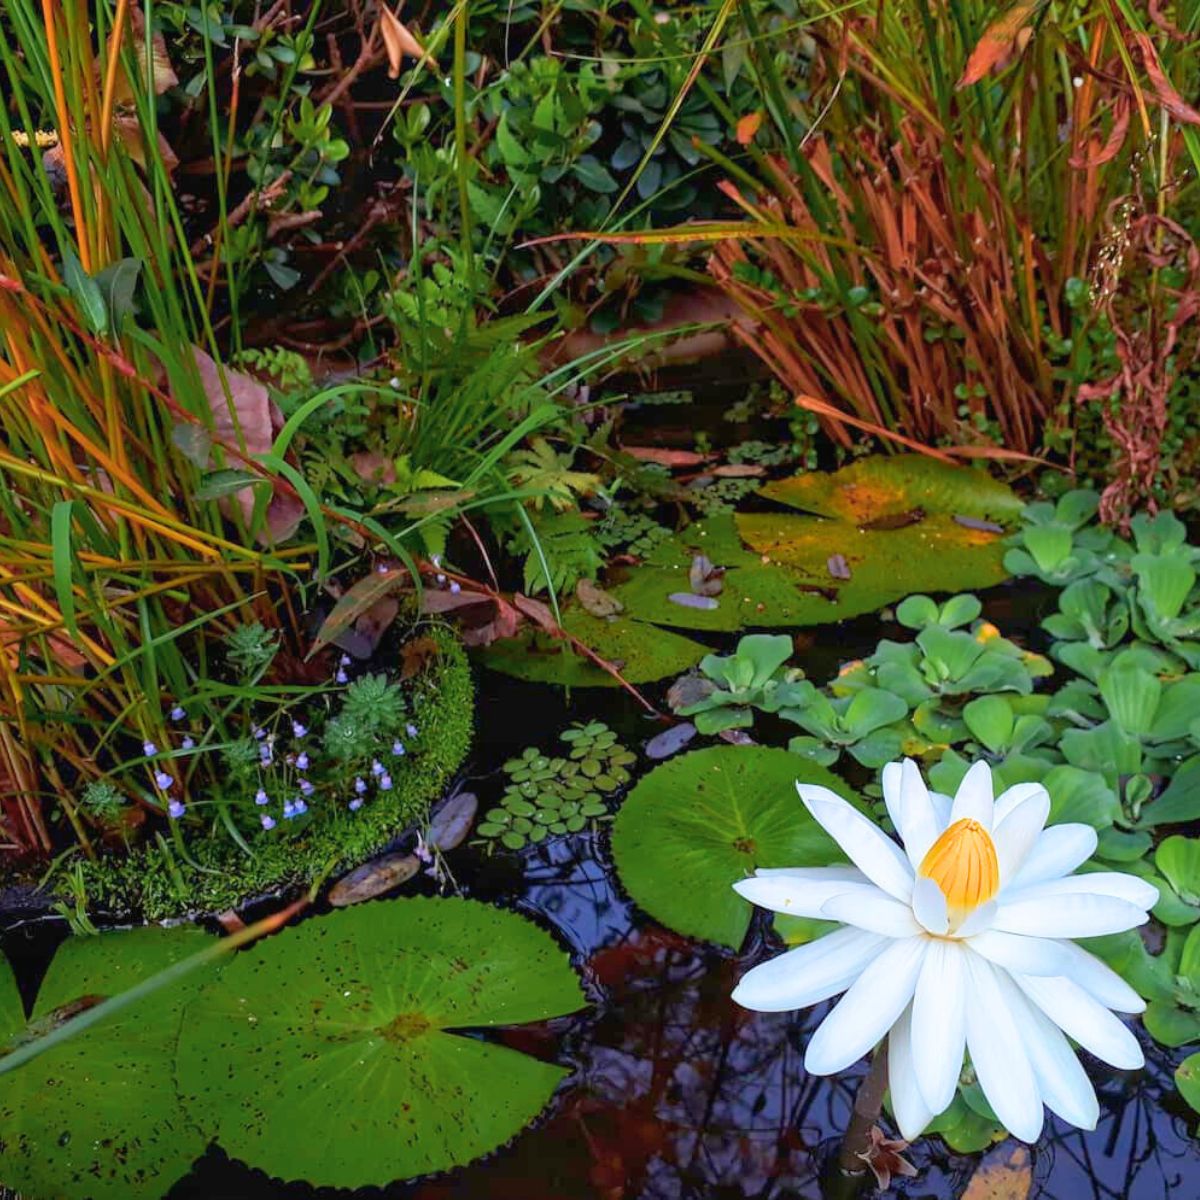 Nymphaea Lotus in a garden